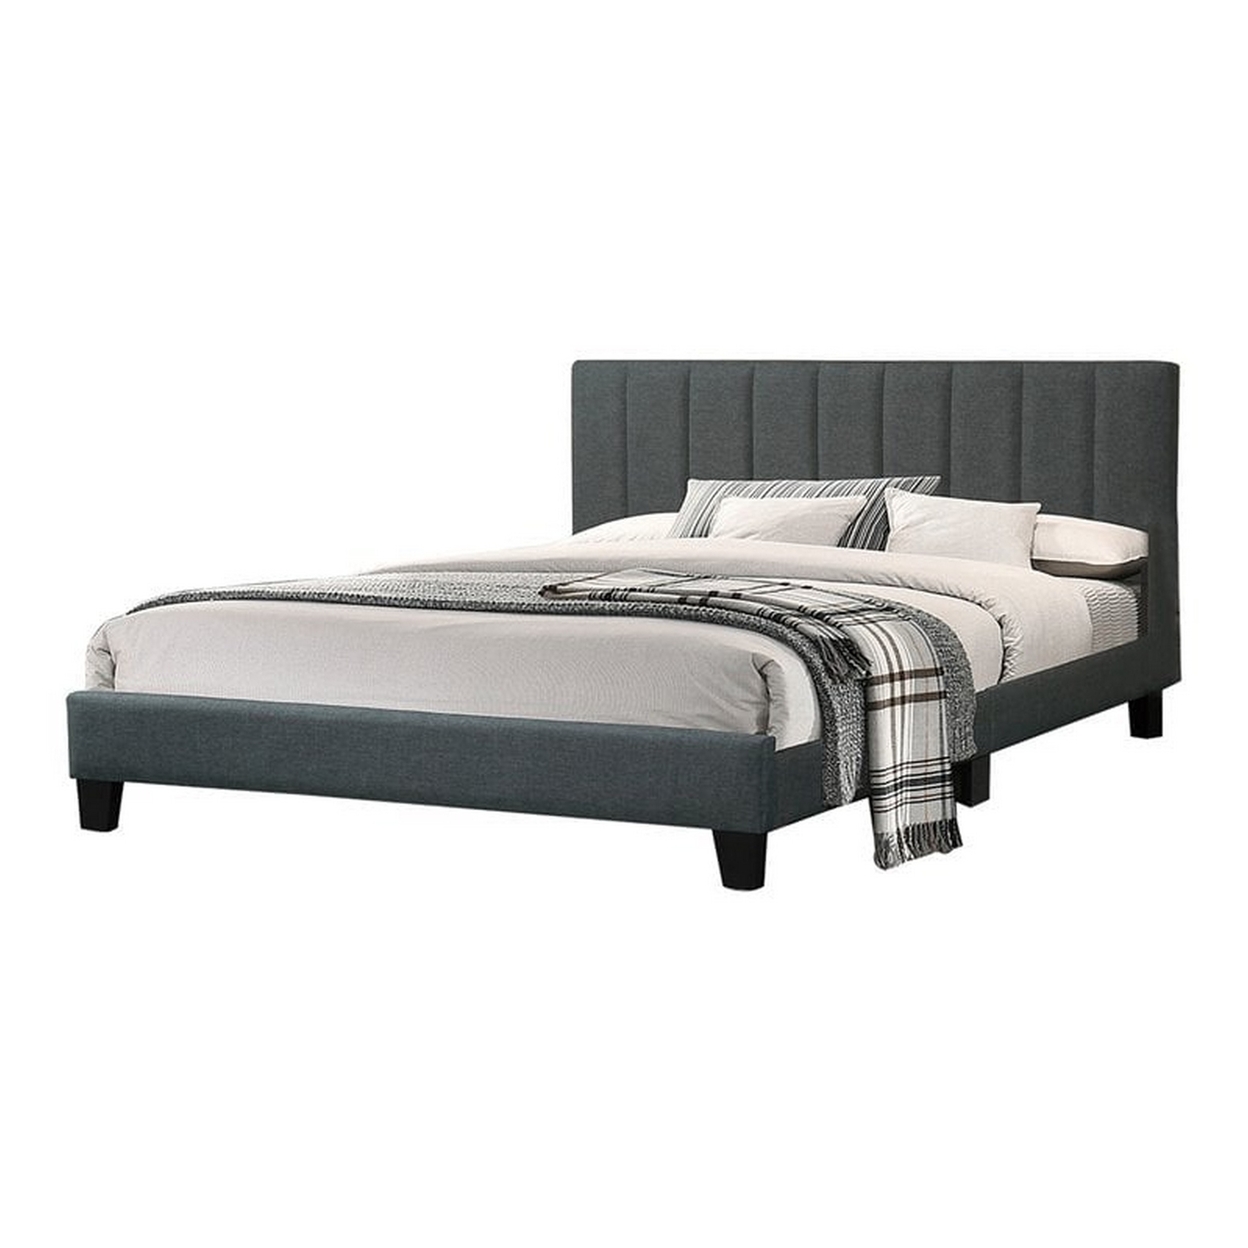 Eve Platform King Size Bed, Vertical Channel Tufting, Charcoal Upholstery- Saltoro Sherpi